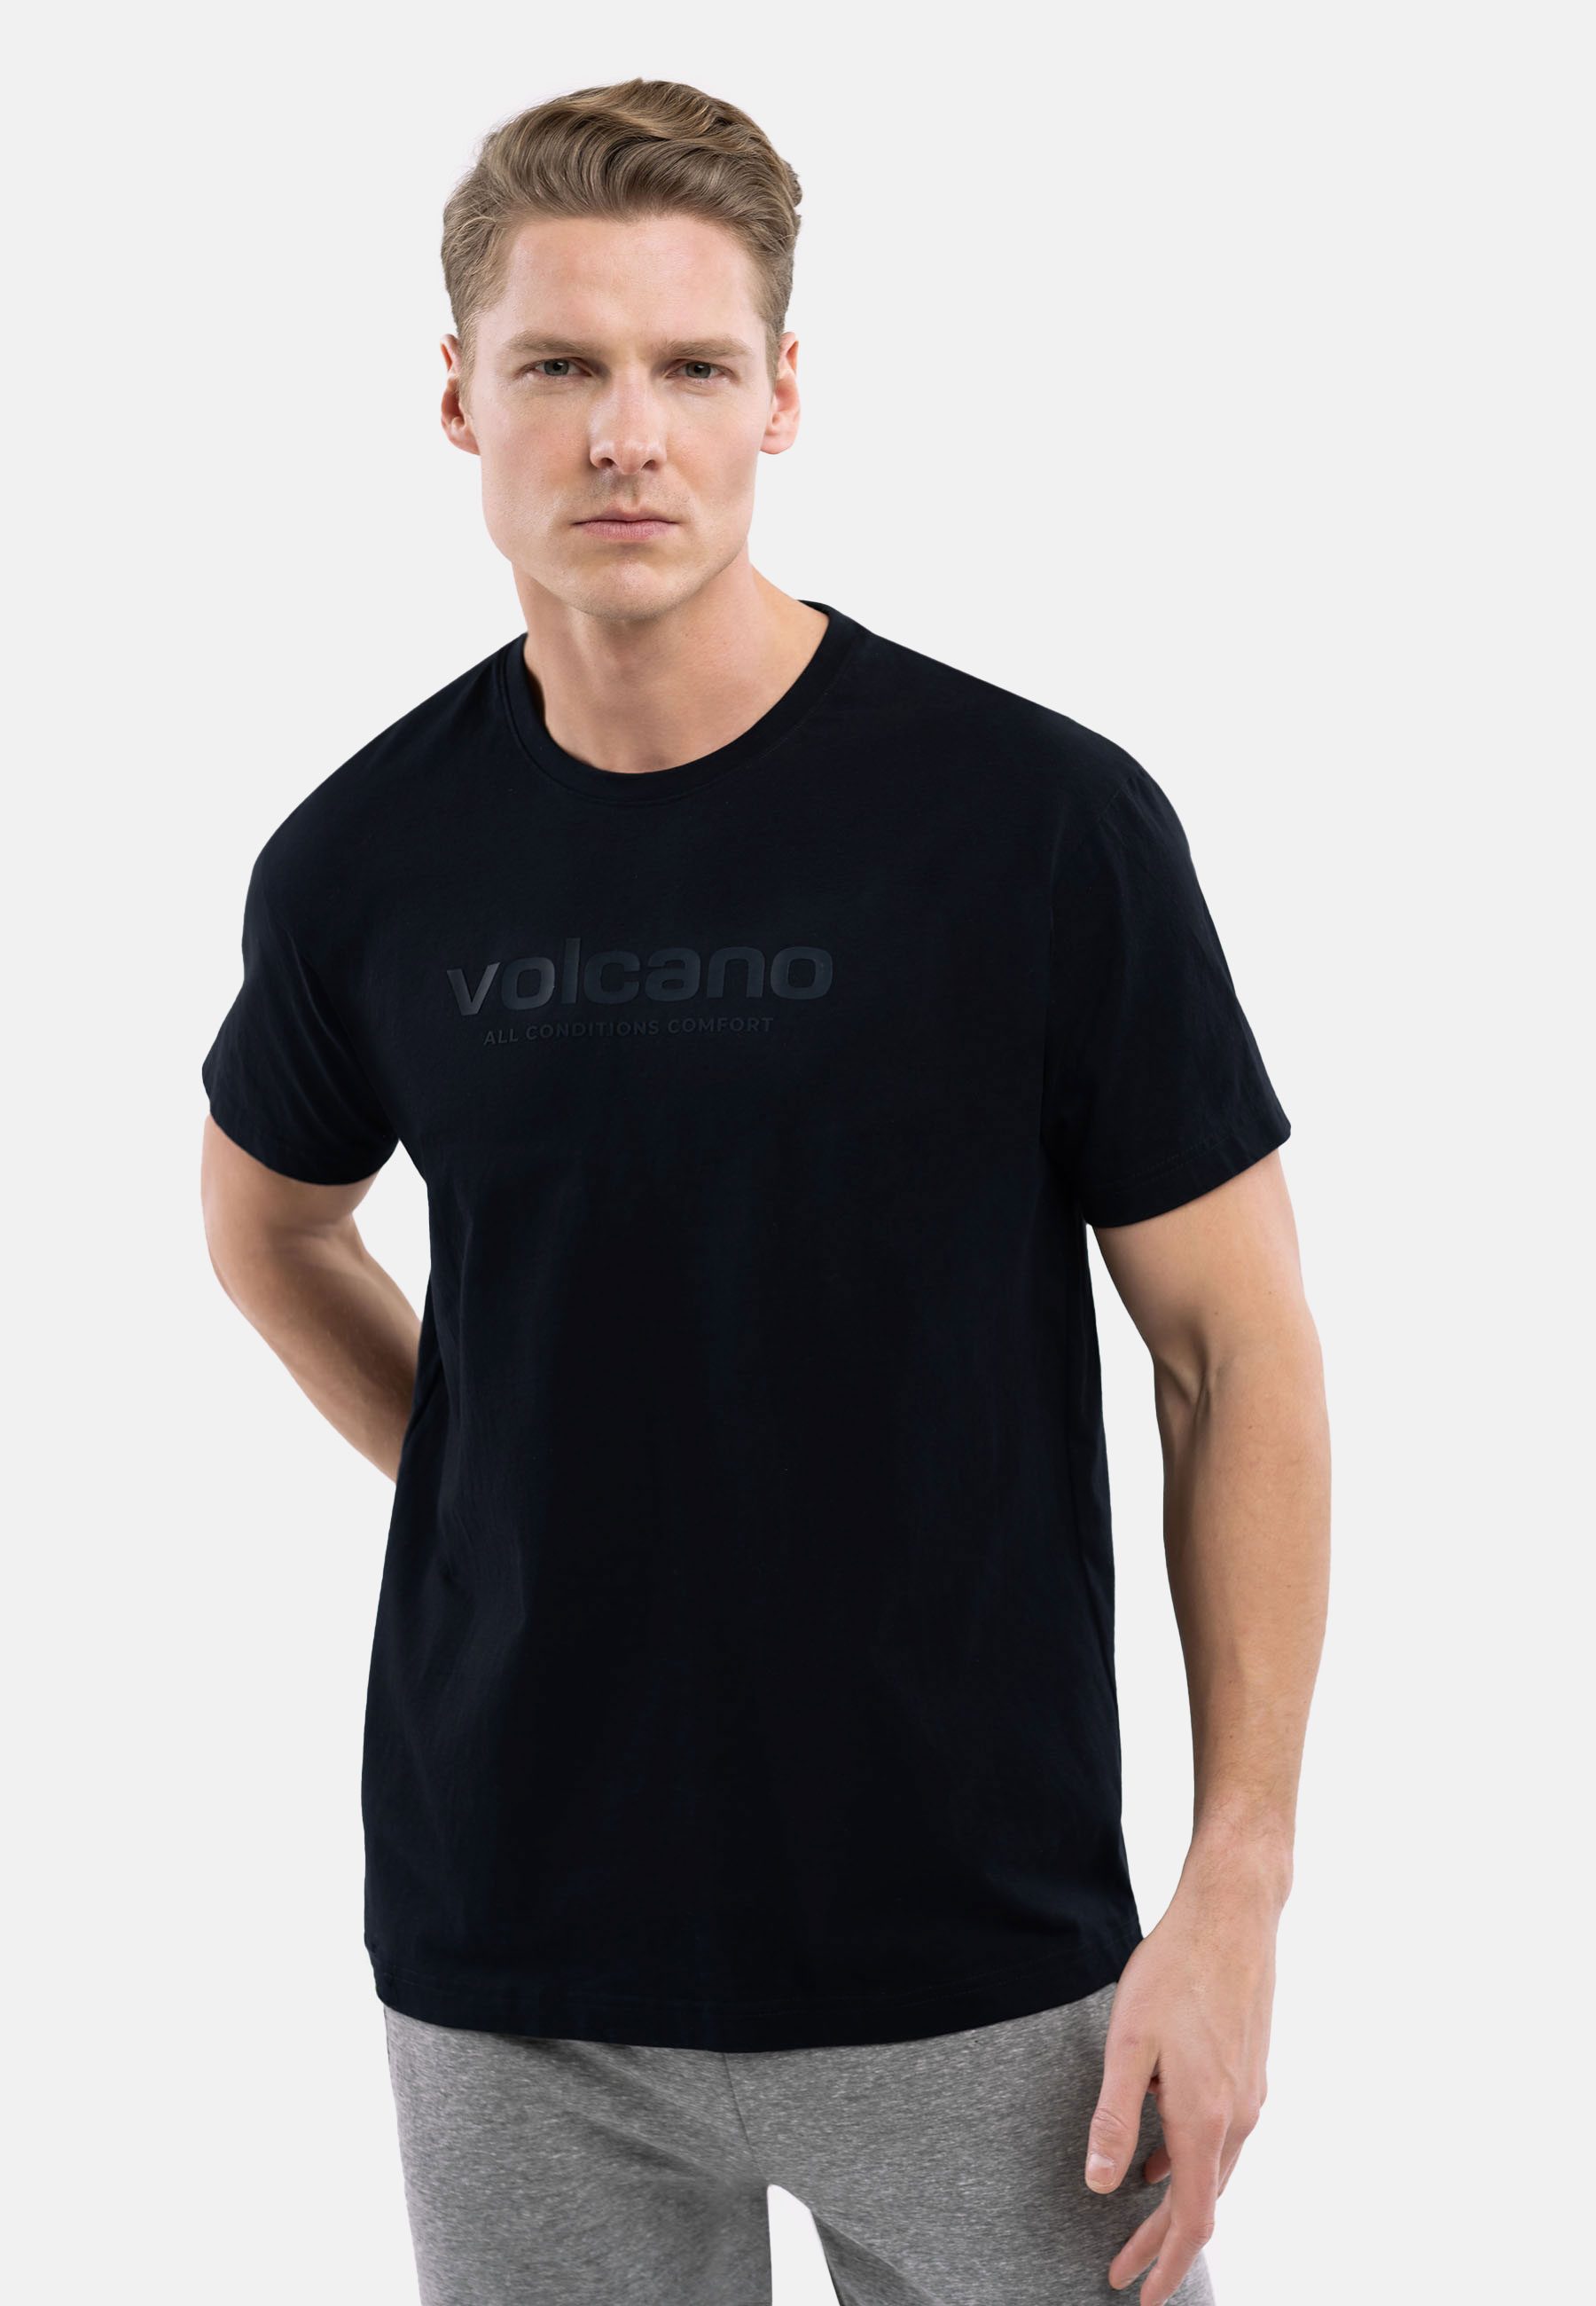 Volcano Man's T-Shirt T-Wit Navy Blue